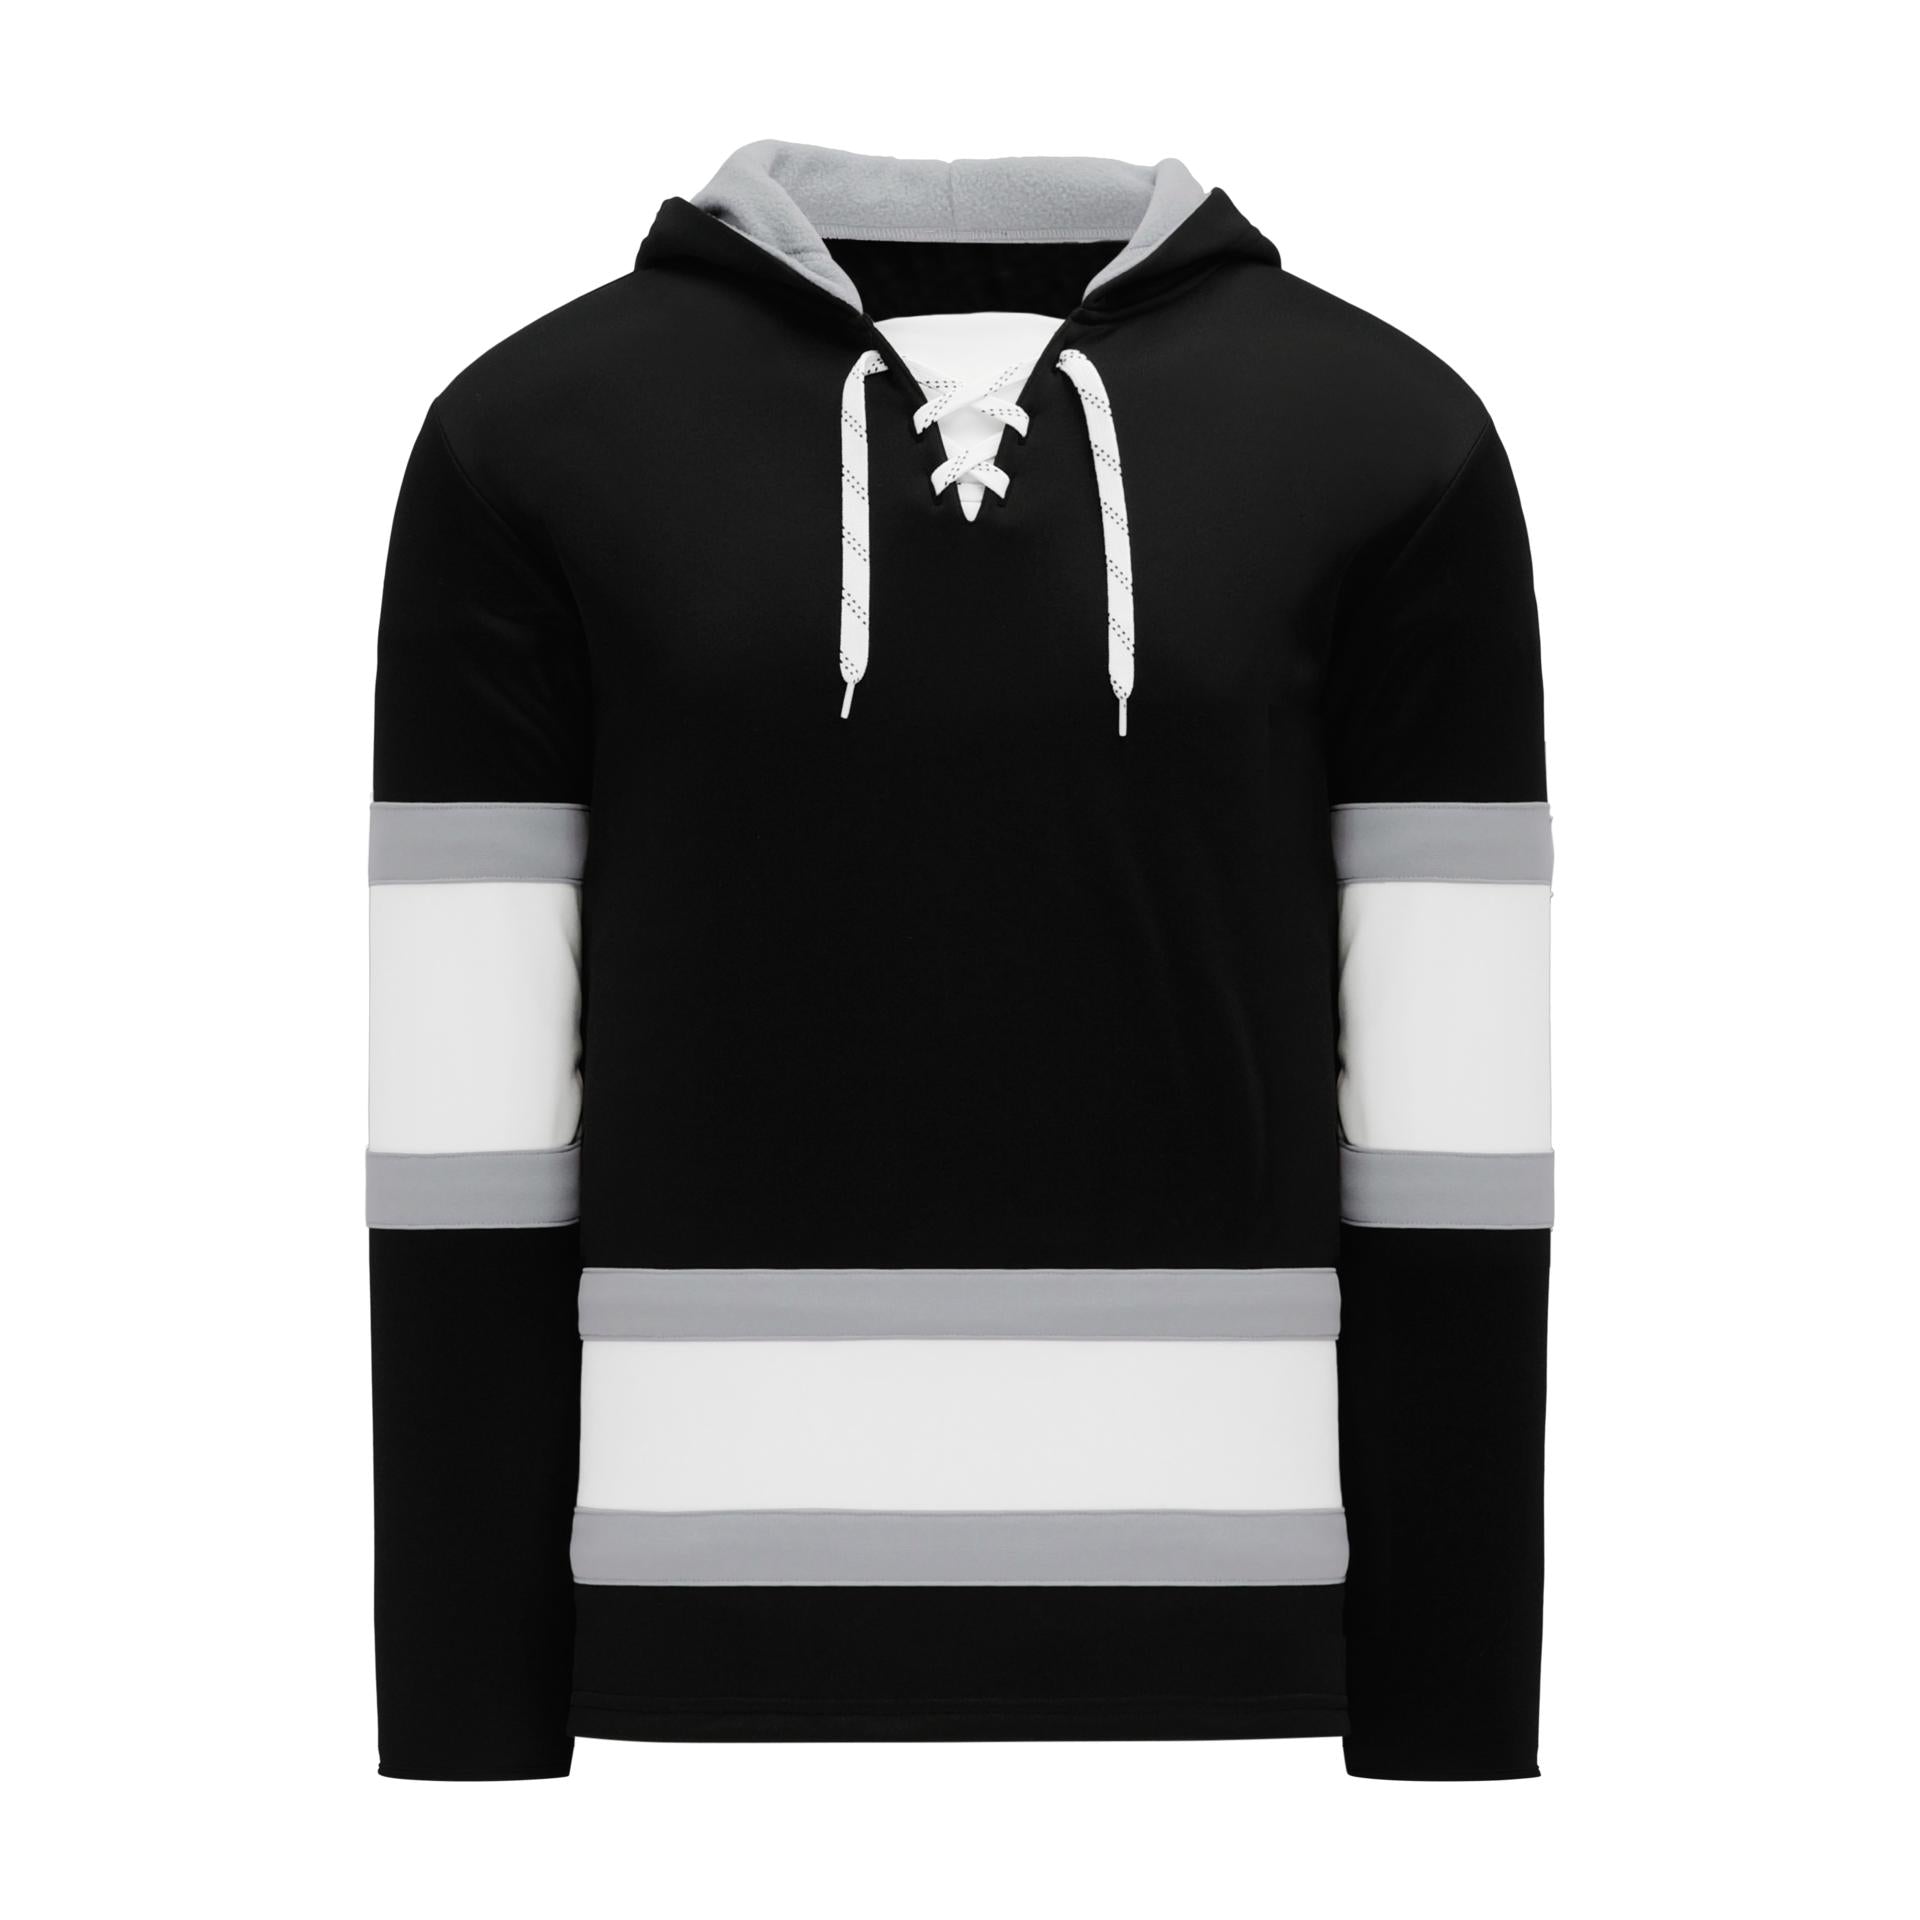 NHL Reebok LA Kings Hooded Lace-Up Hockey Sweatshirt New Mens MEDIUM $70